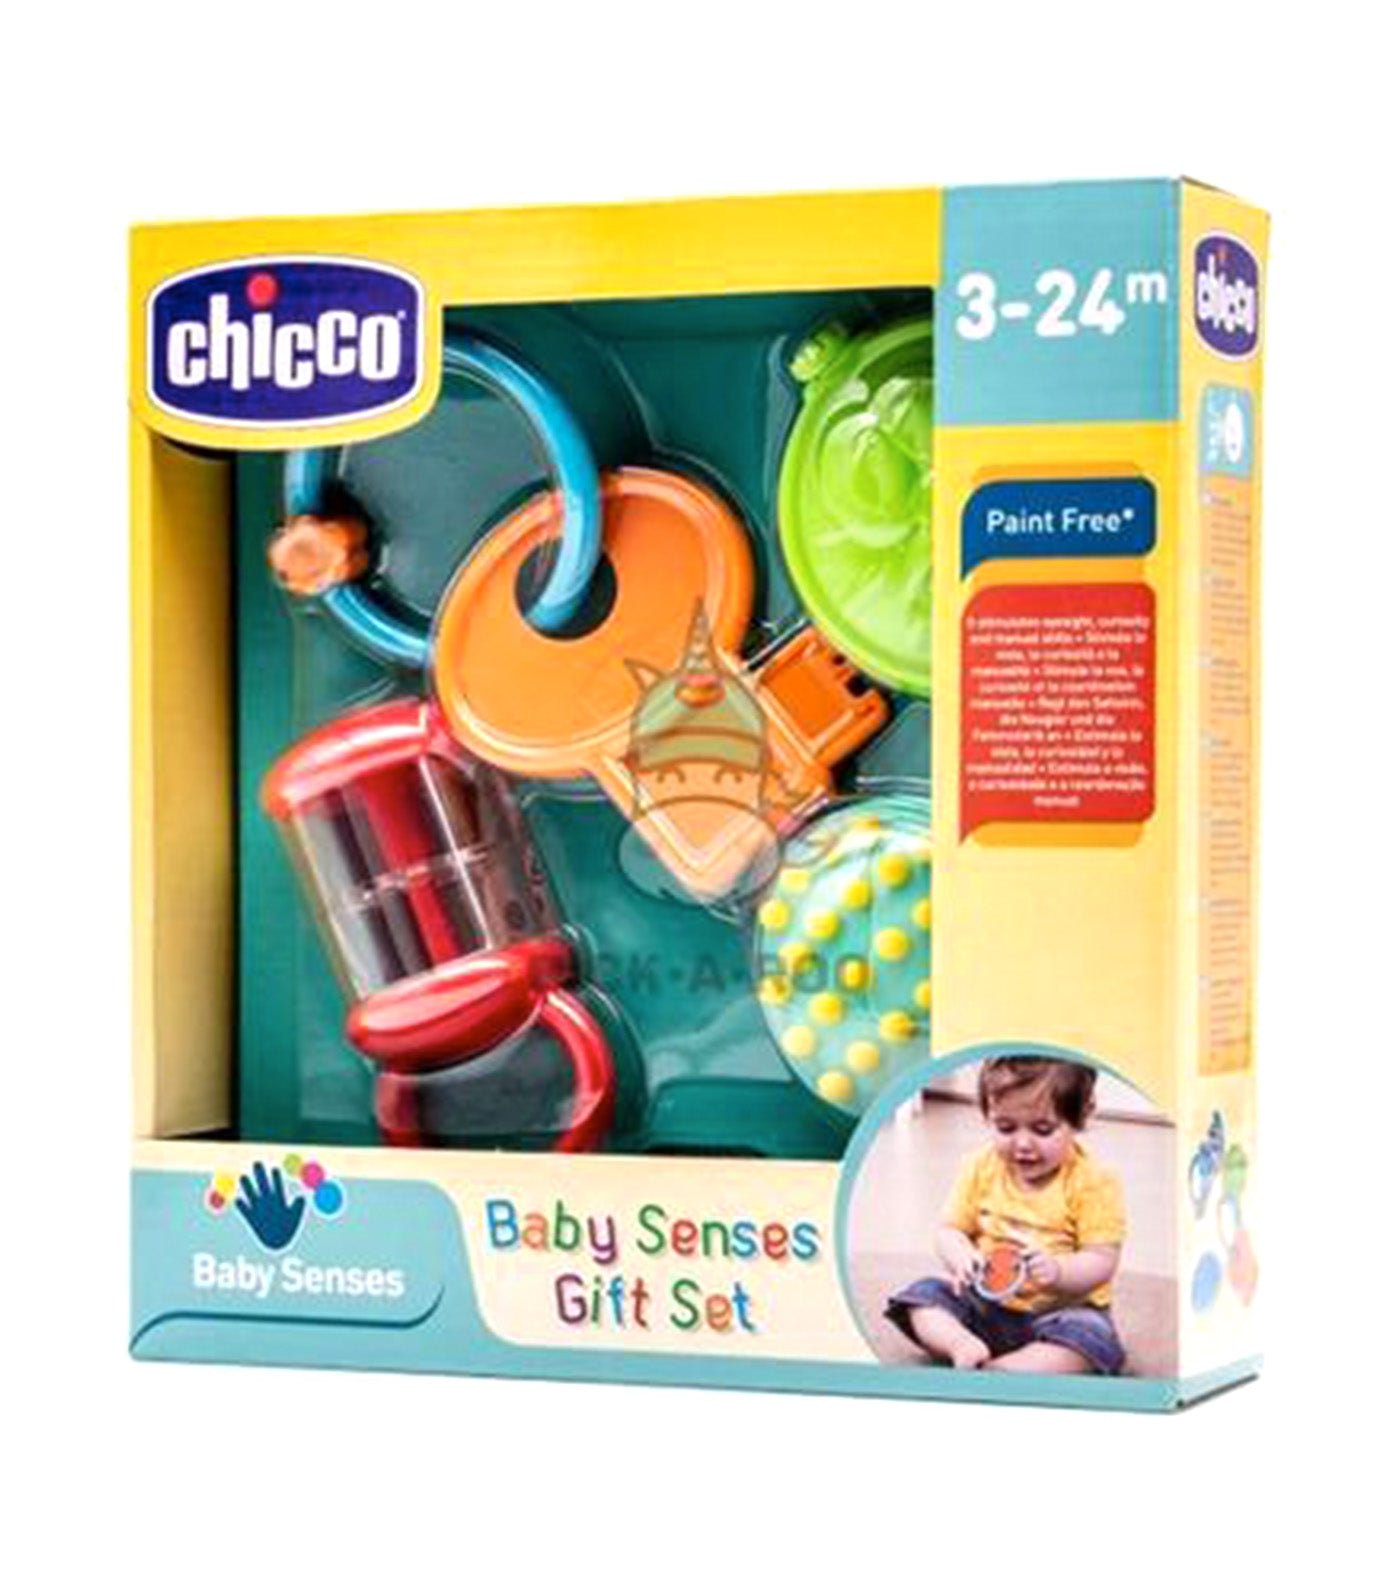 Baby Senses Gift Set